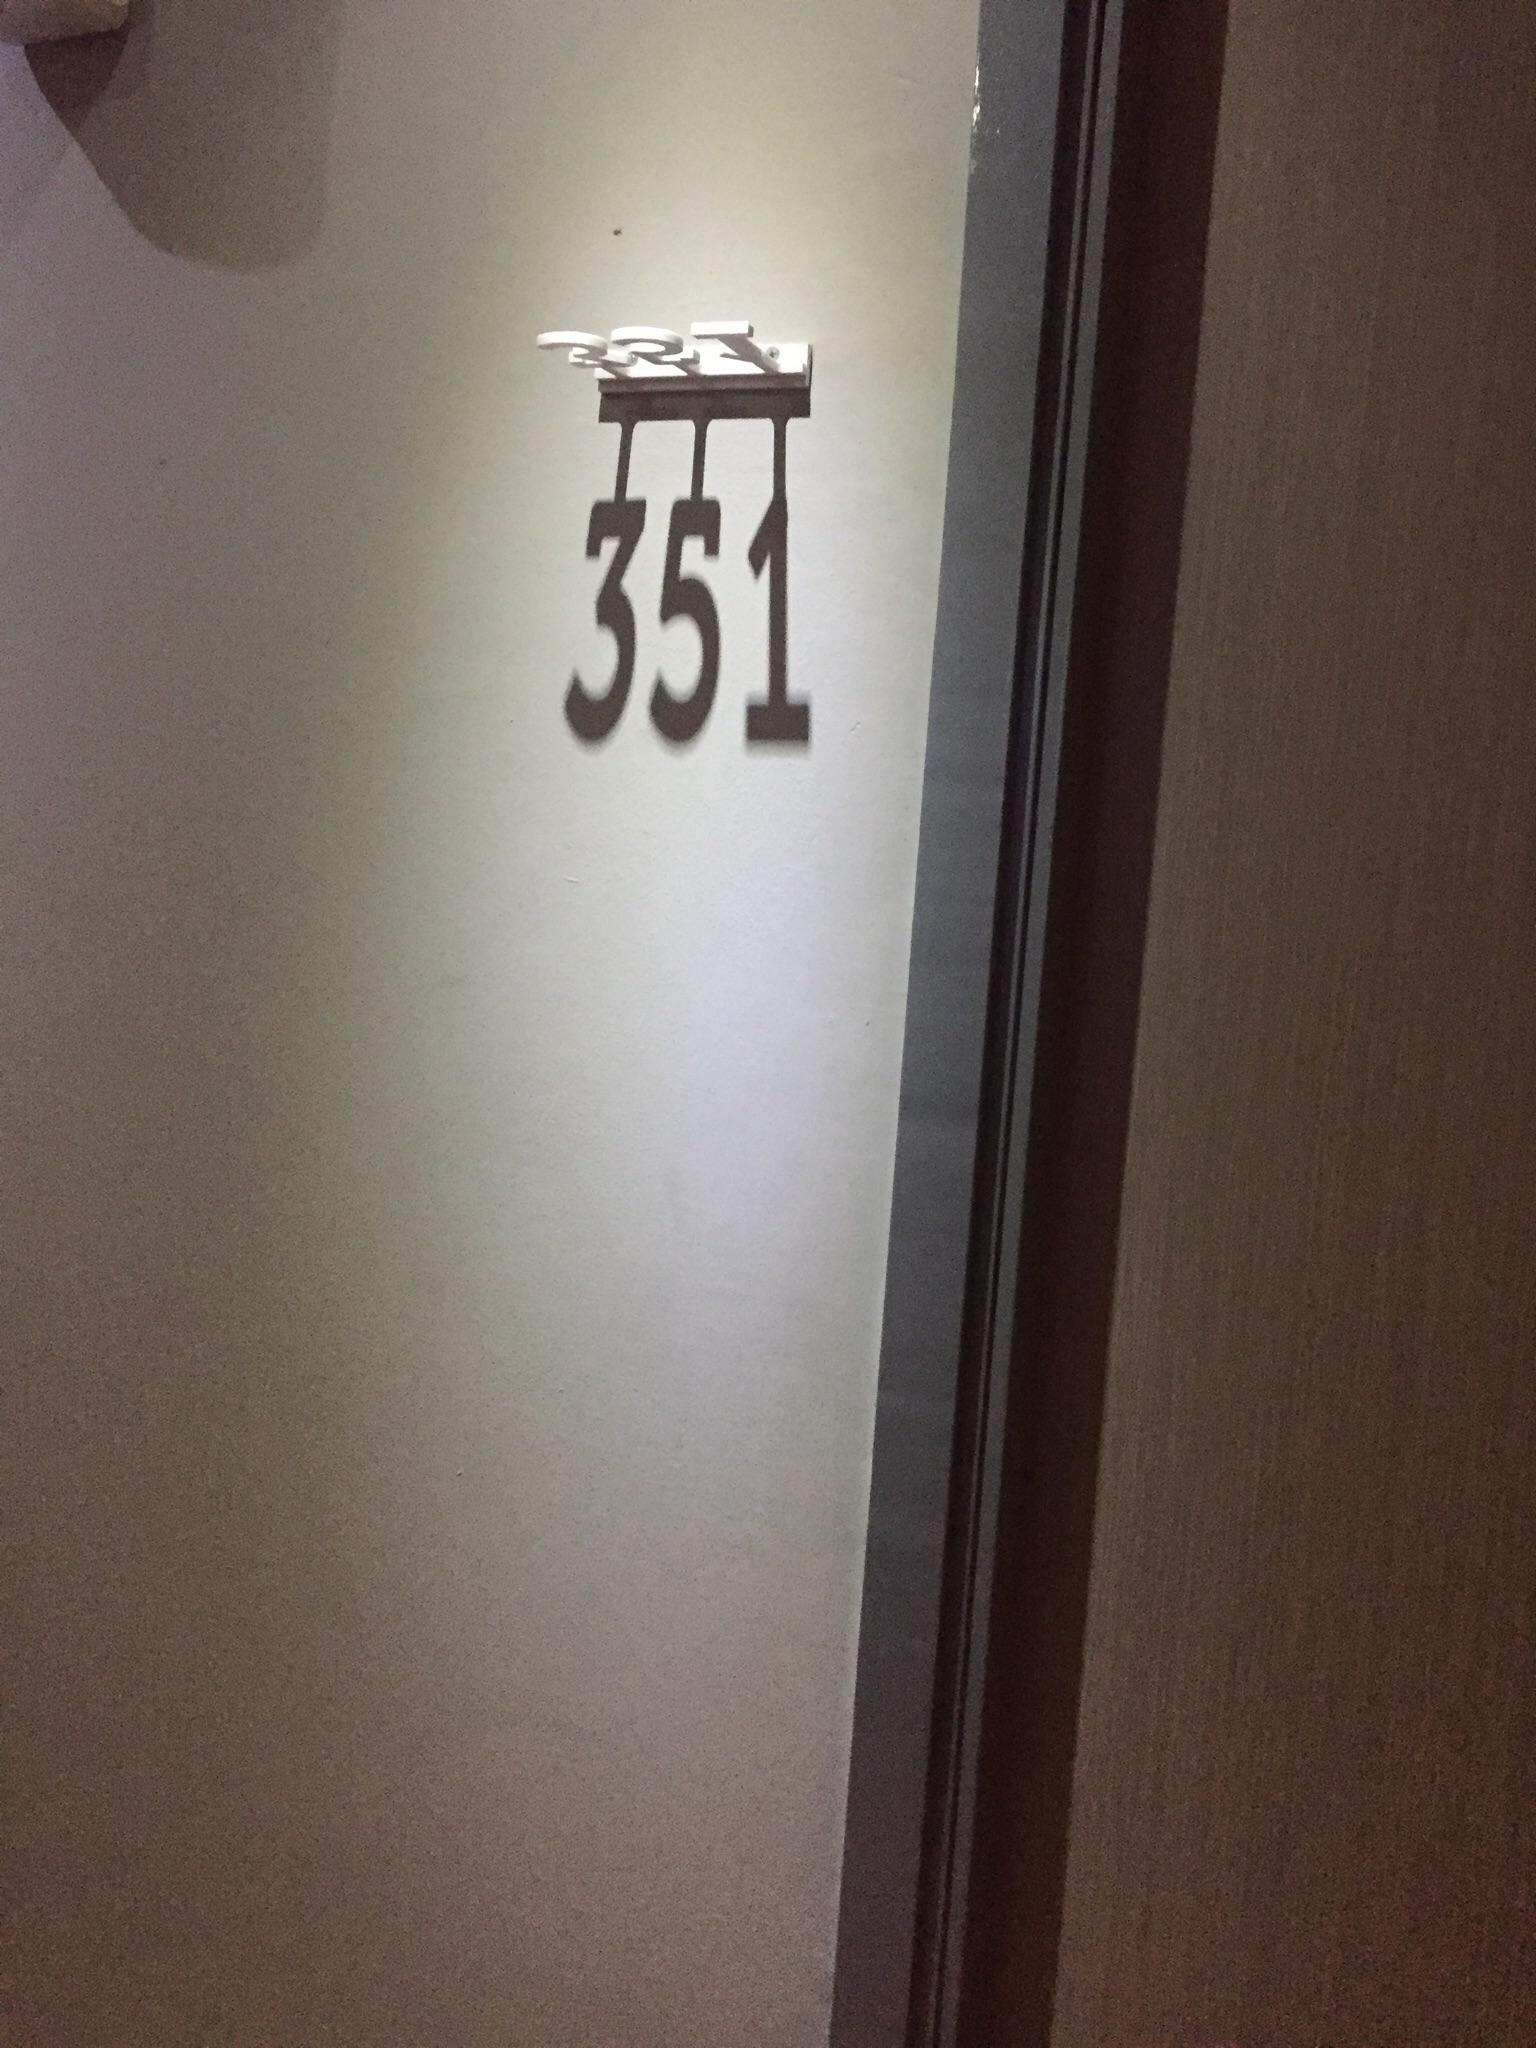 numer pokoju hotelowego.jpg